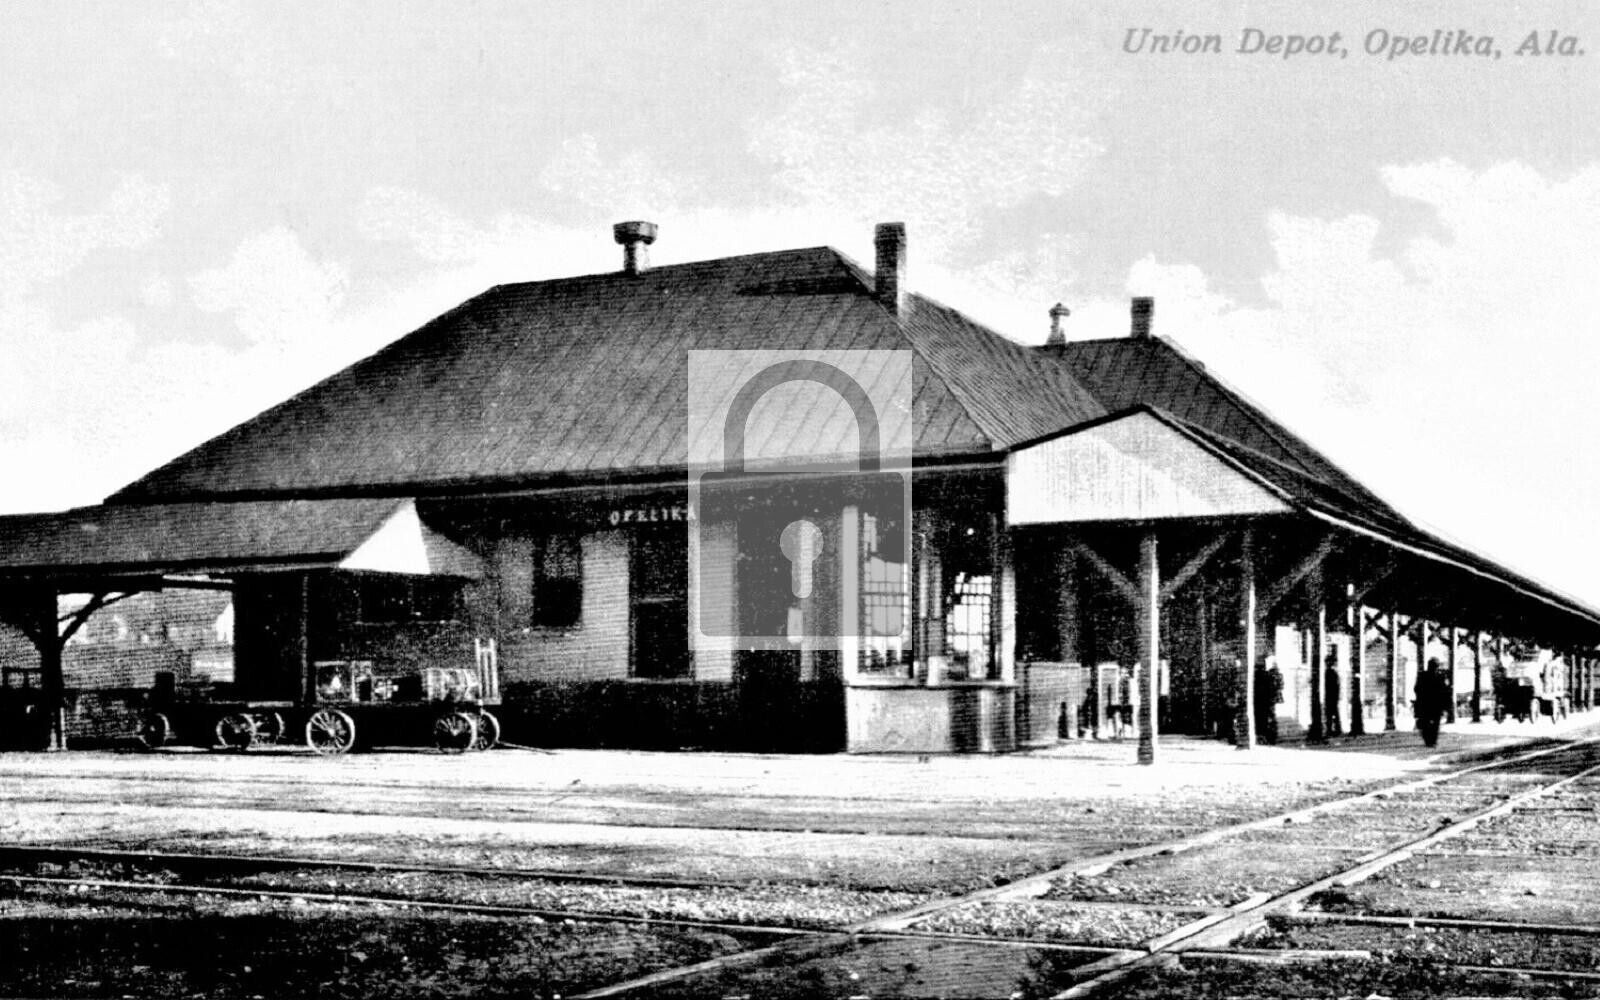 Railroad Train Station Union Depot Opelika Alabama AL - 8x10 Reprint